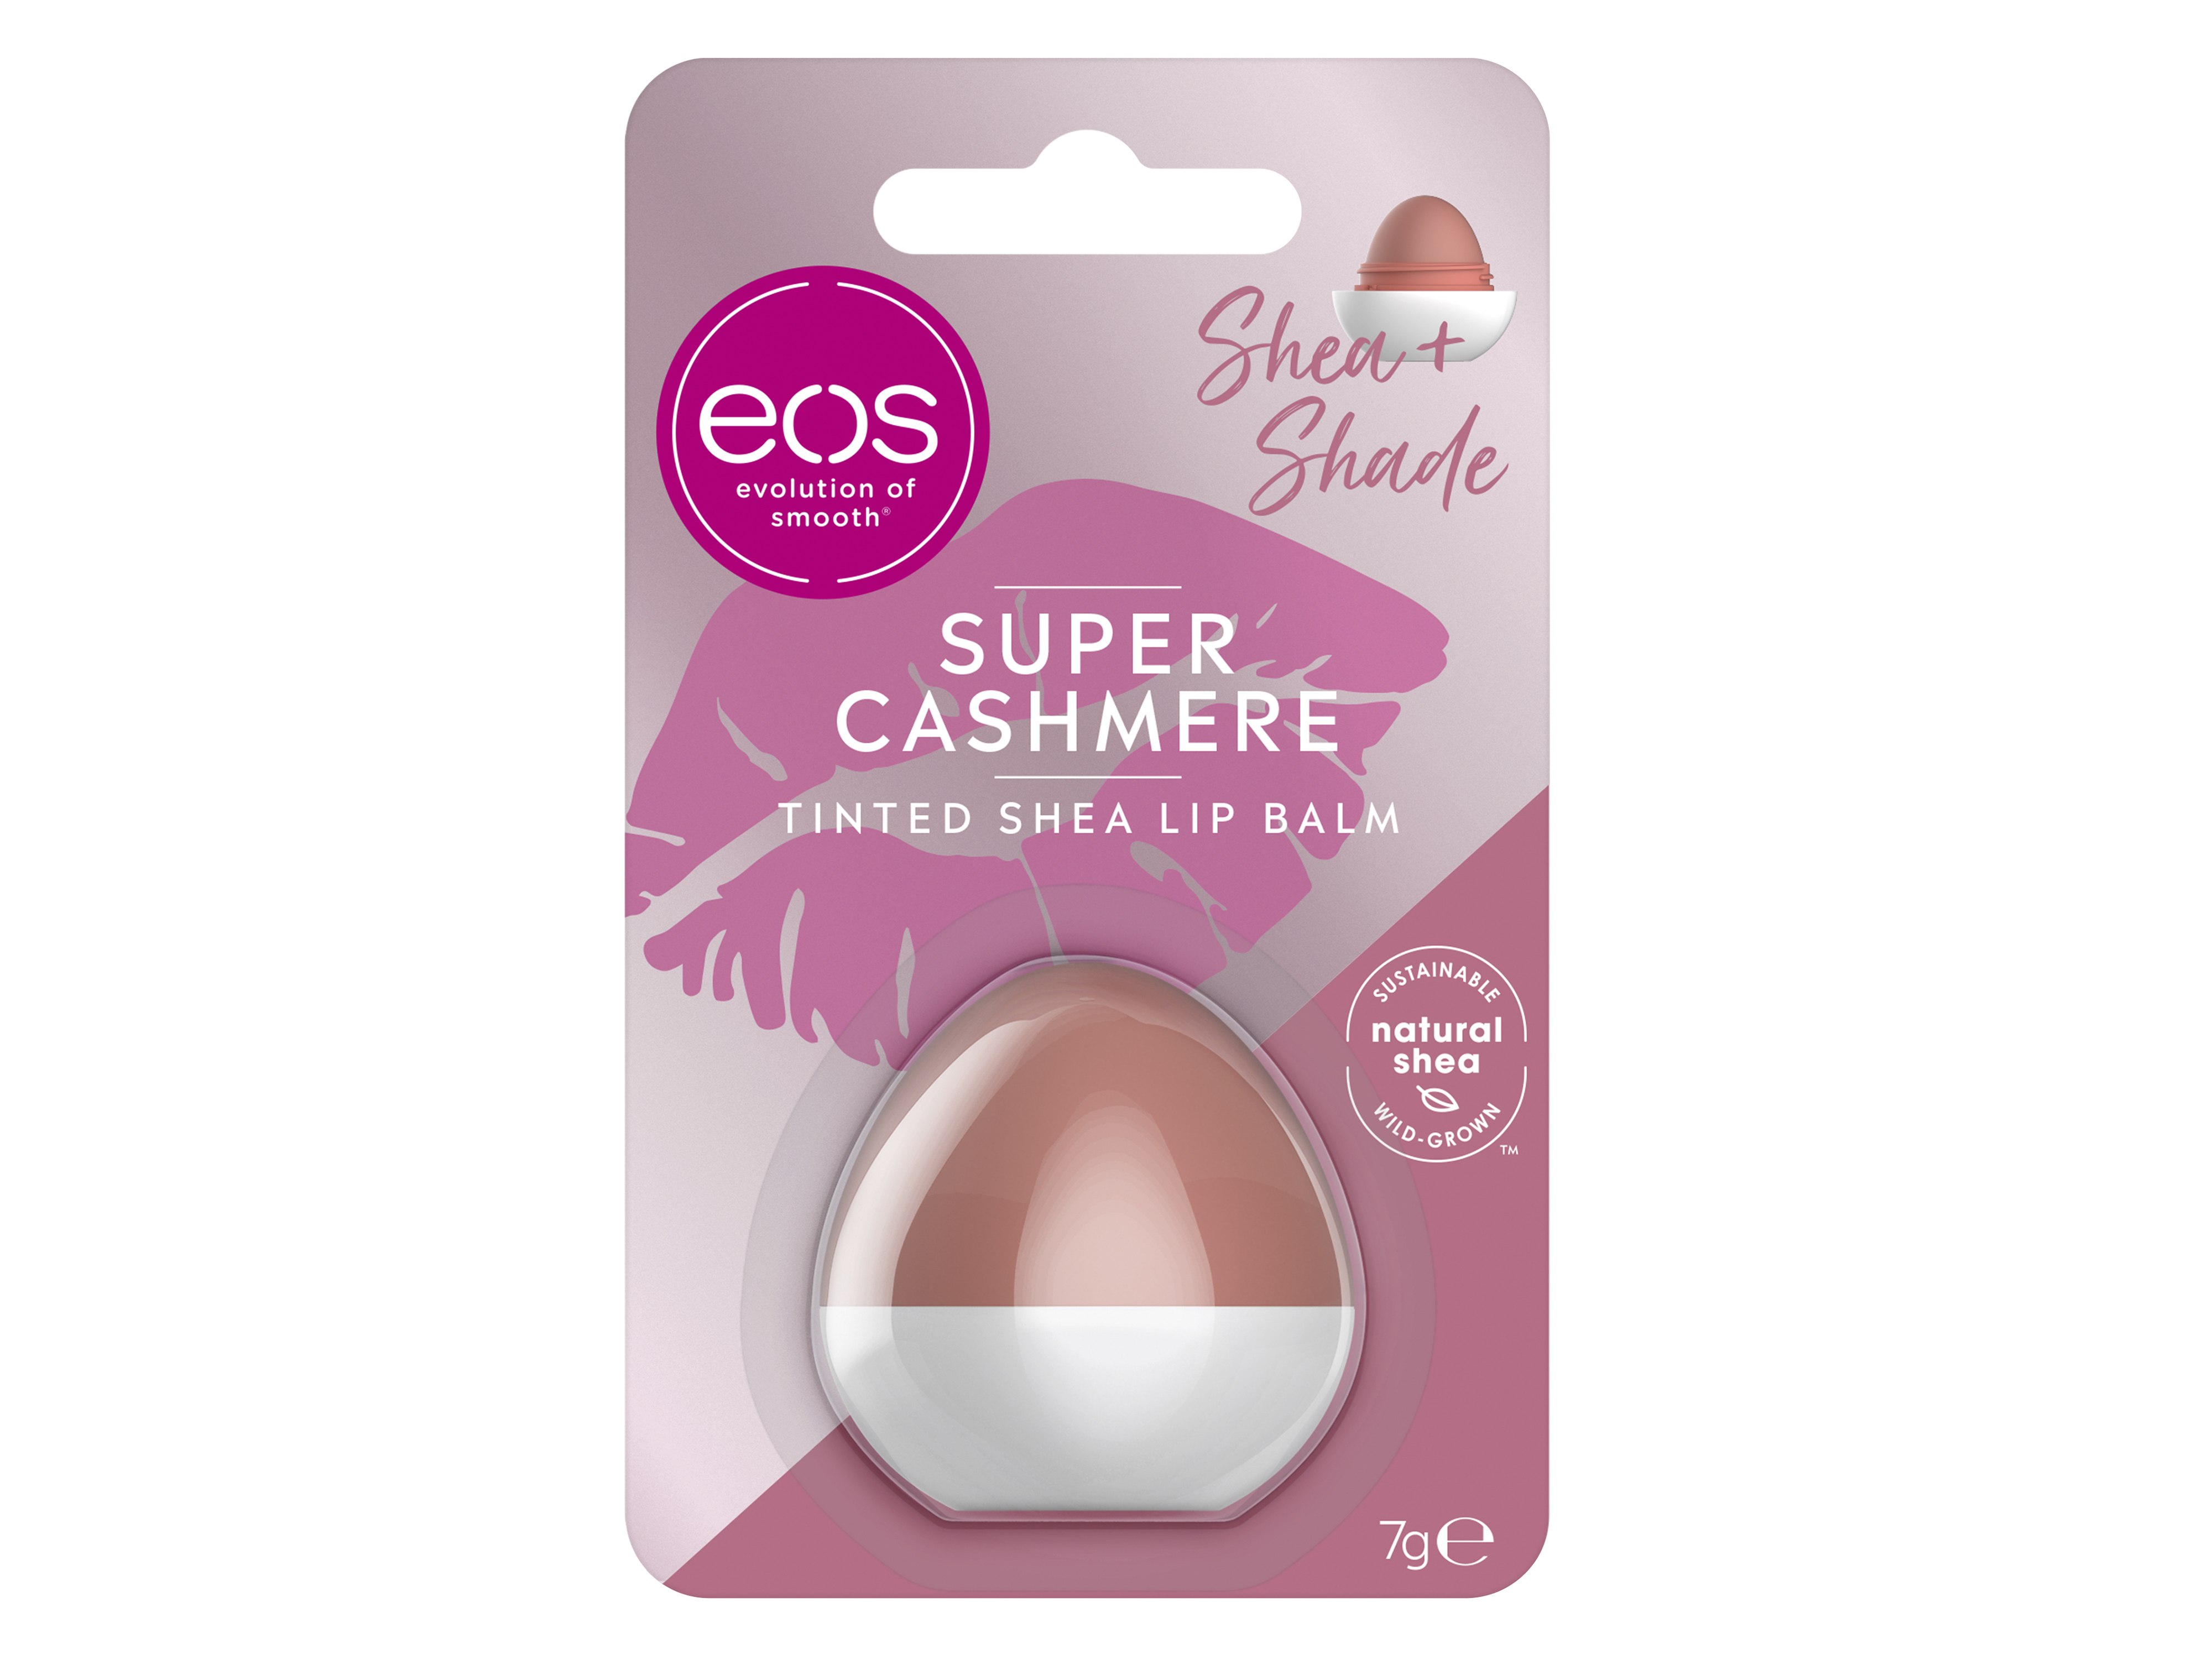 Eos Shea + Shade Super Cashmere, 1 stk.